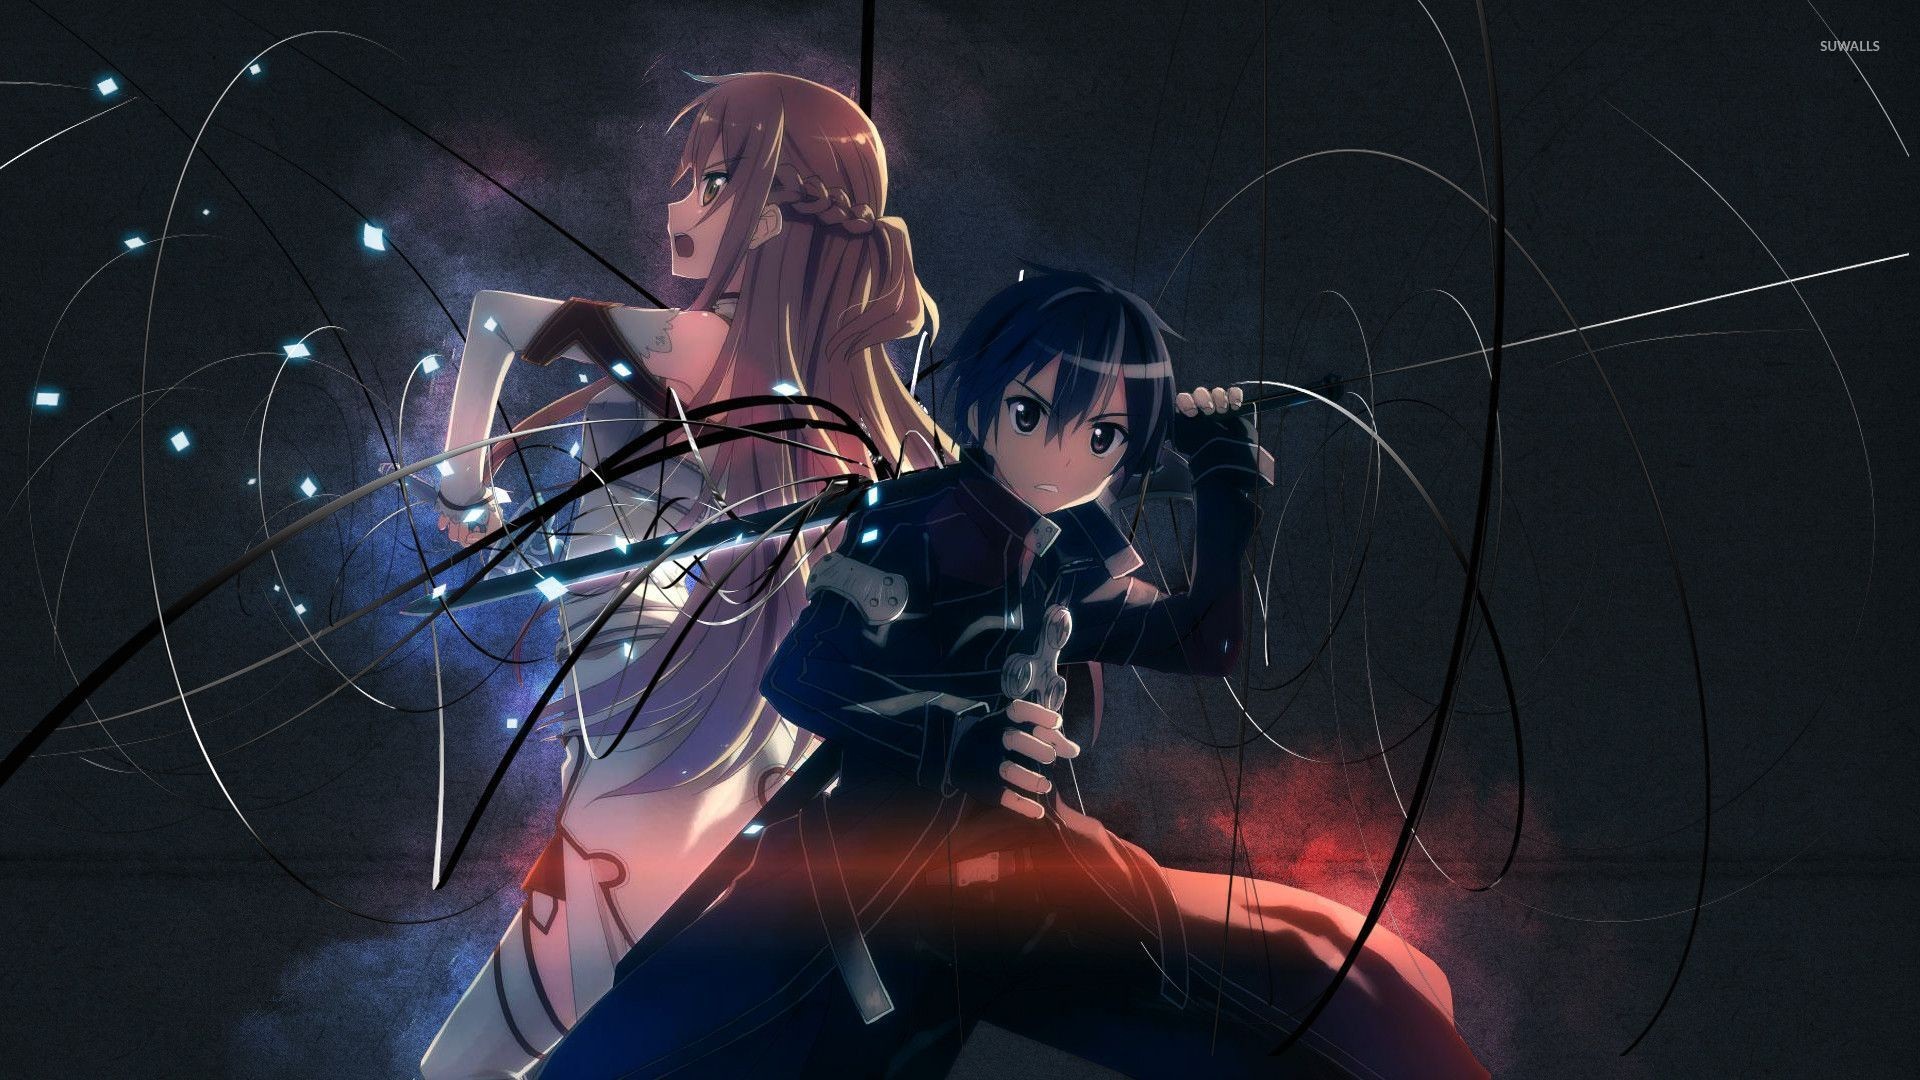 Sword Art Online SAO Anime wallpaper, 1920x1080, 53145